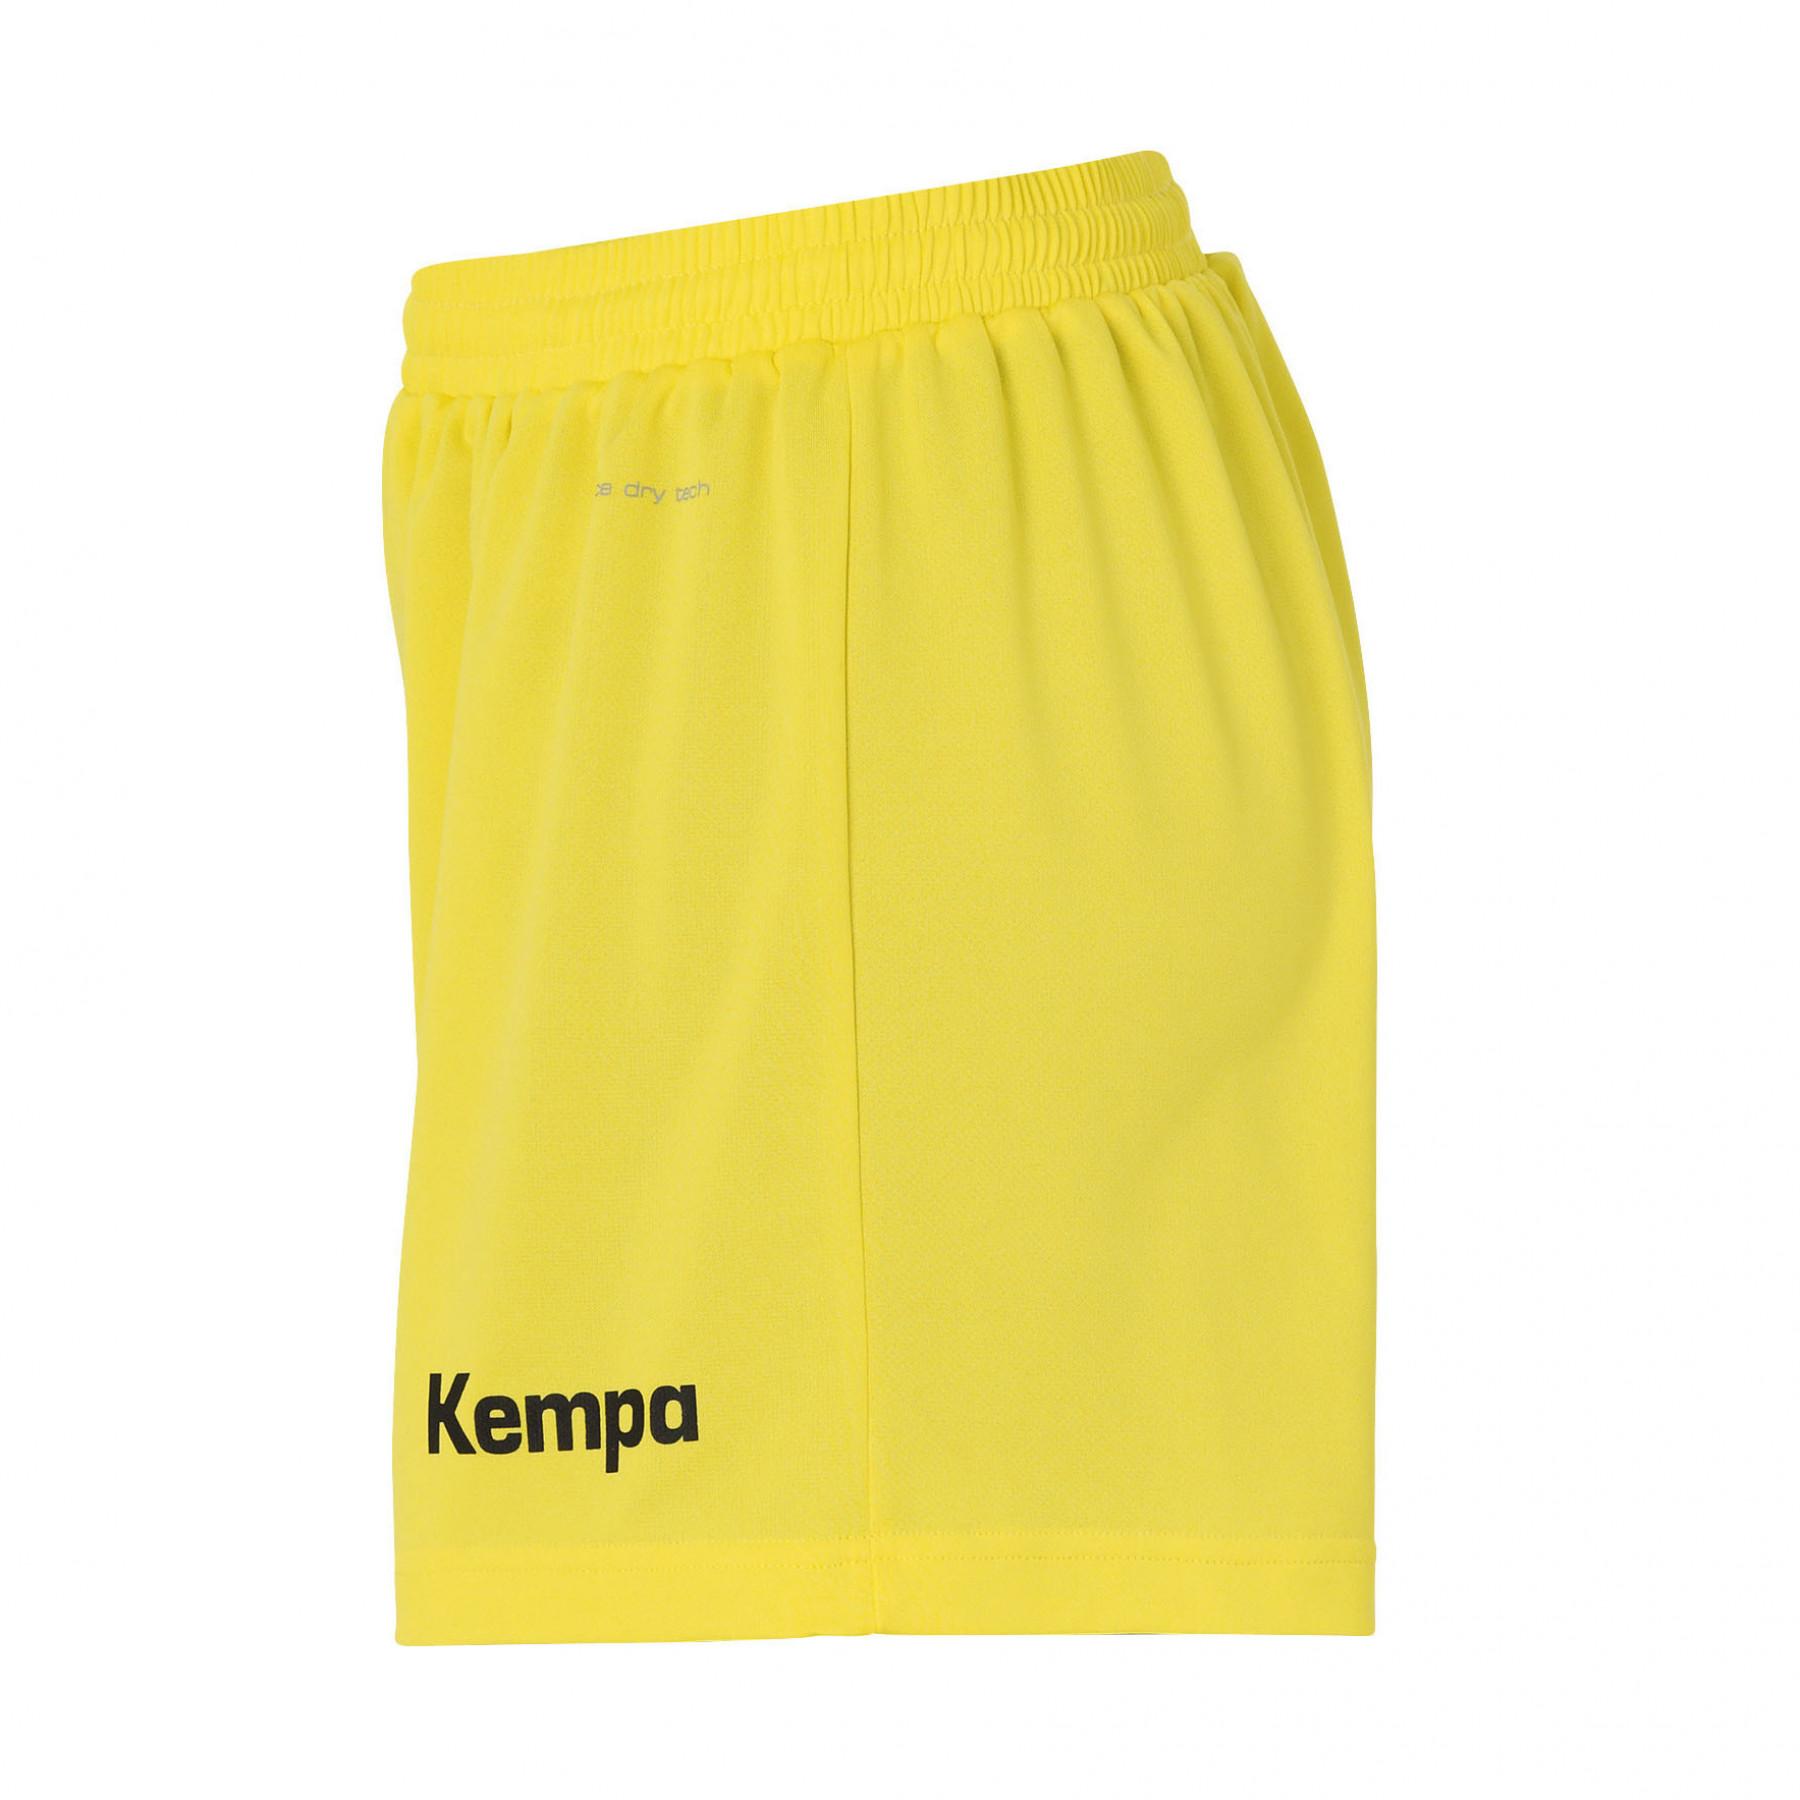 Women's shorts Kempa Peak